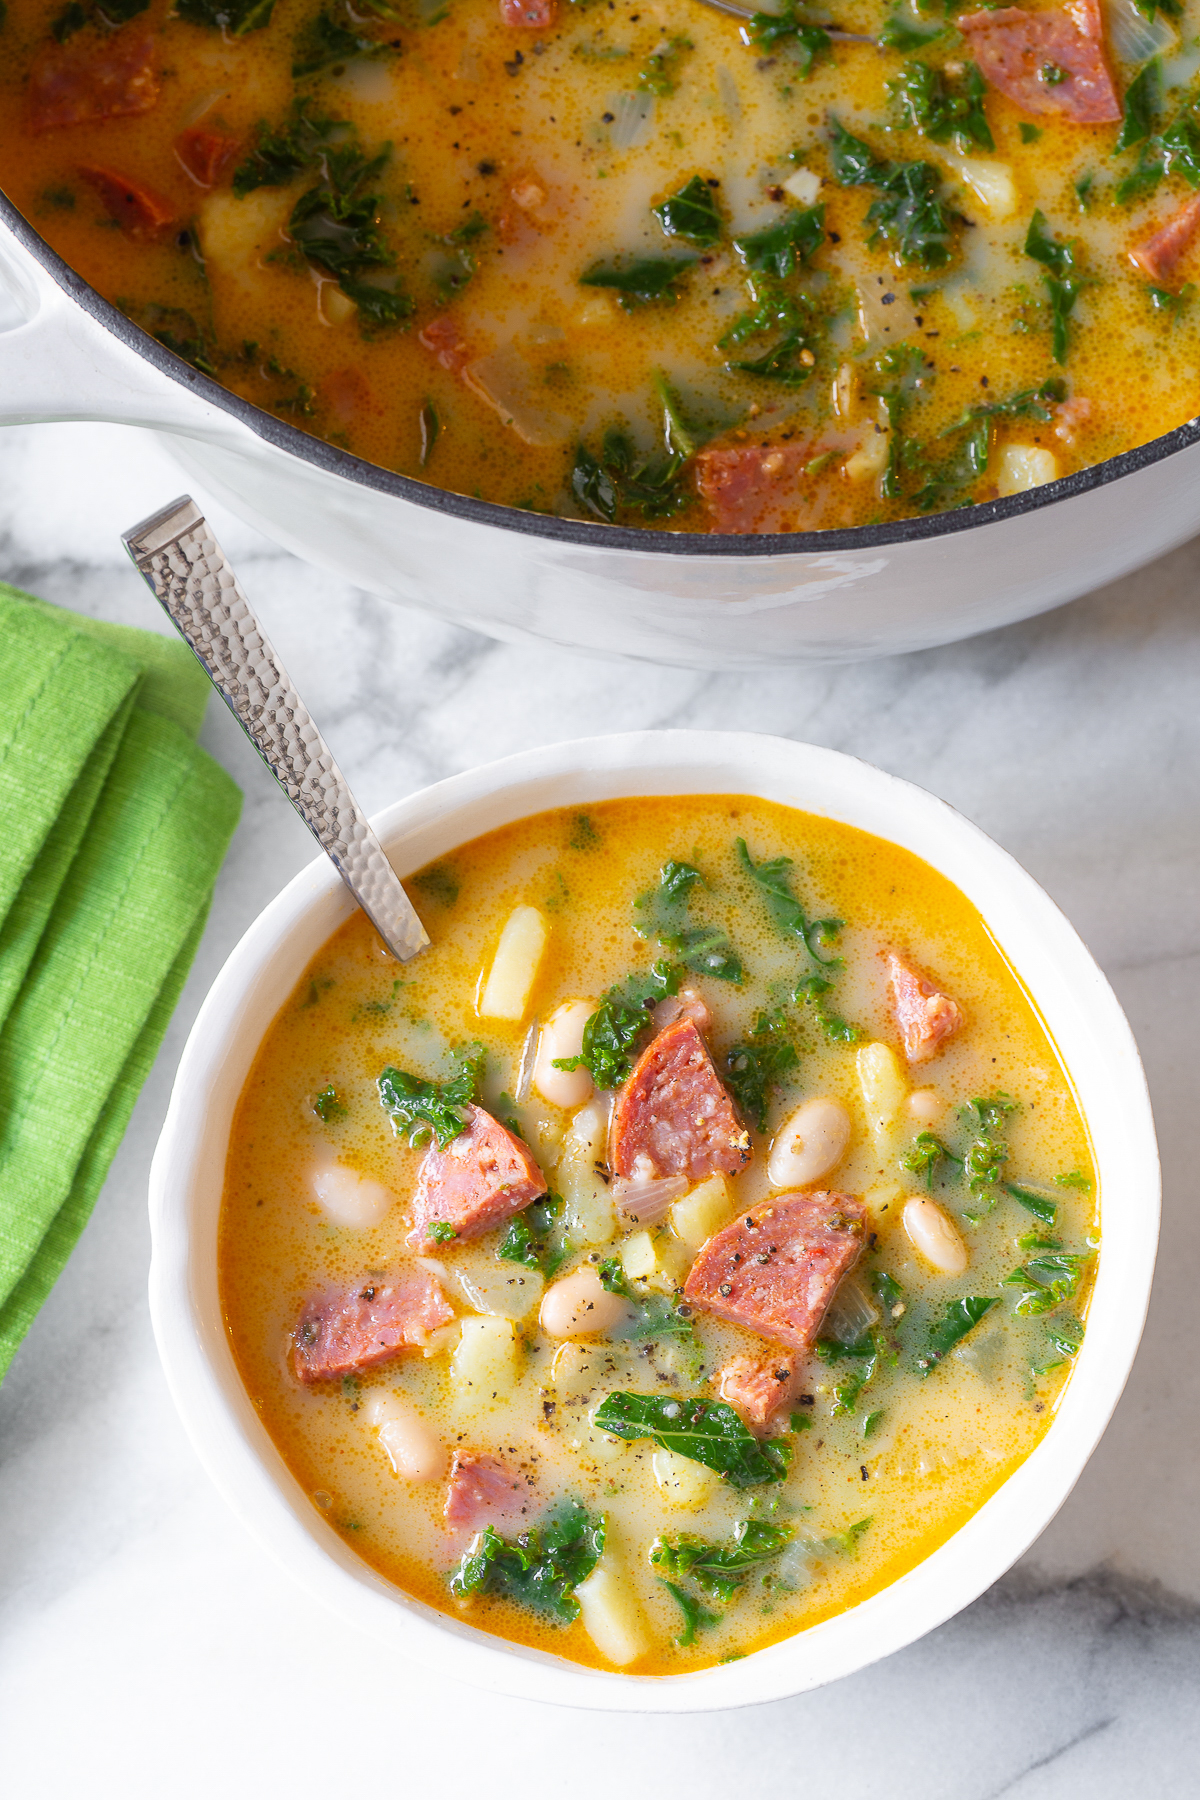 Portuguese kale soup